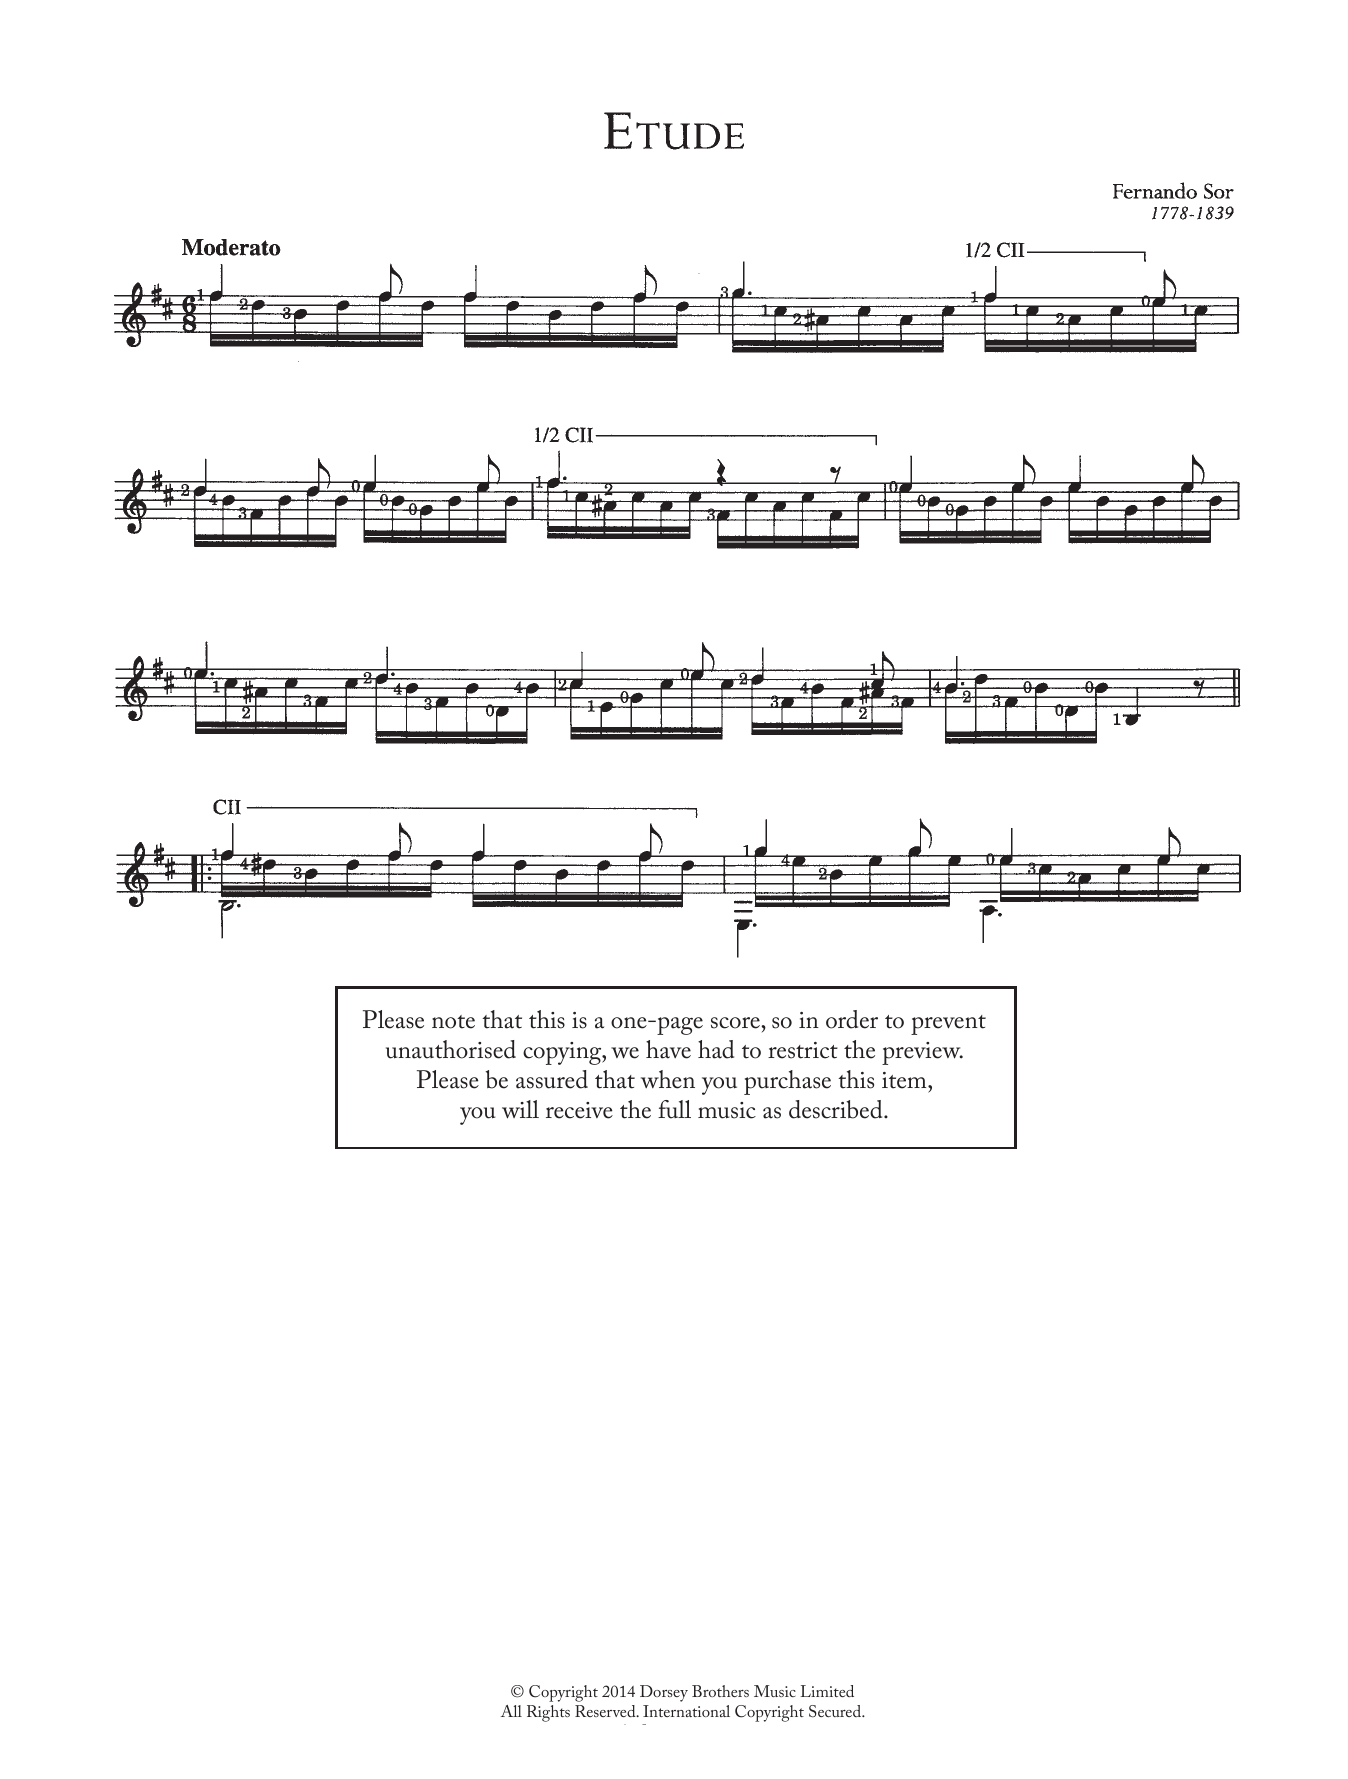 Fernando Sor Etude Sheet Music Notes & Chords for Guitar - Download or Print PDF